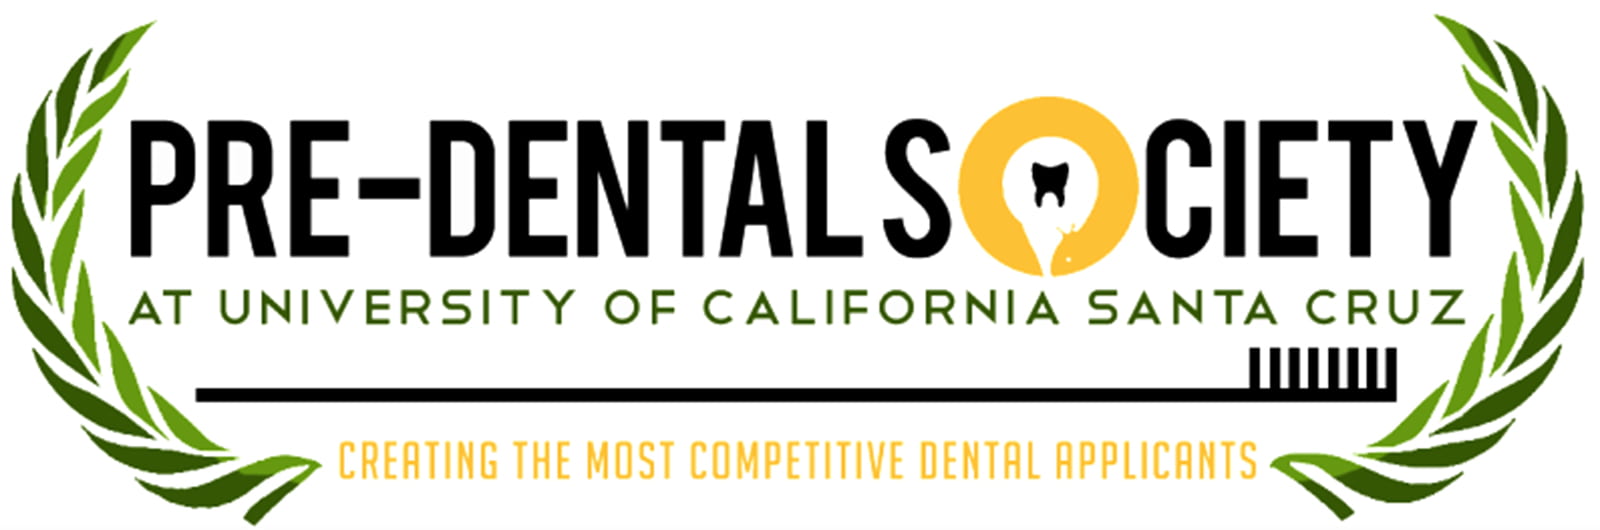 Banner reads "Pre-dental Society at University of California Santa Cruz, creating the most competitive dental applications.